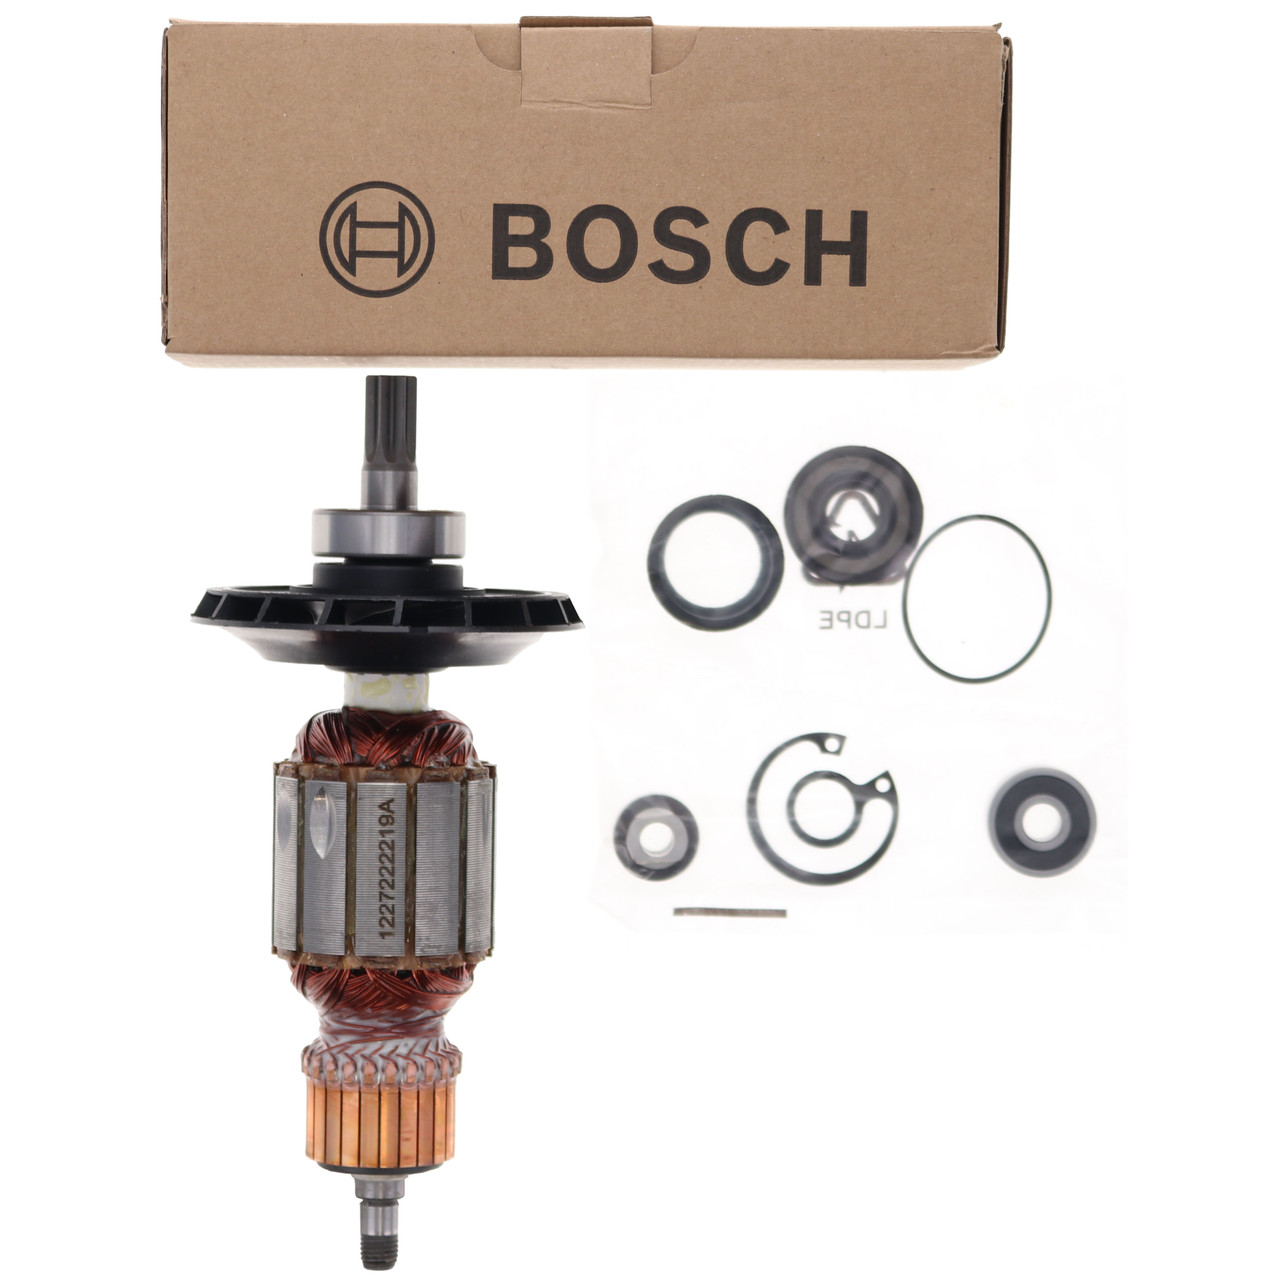 Bosch 2615294309 Power Tool Coupling